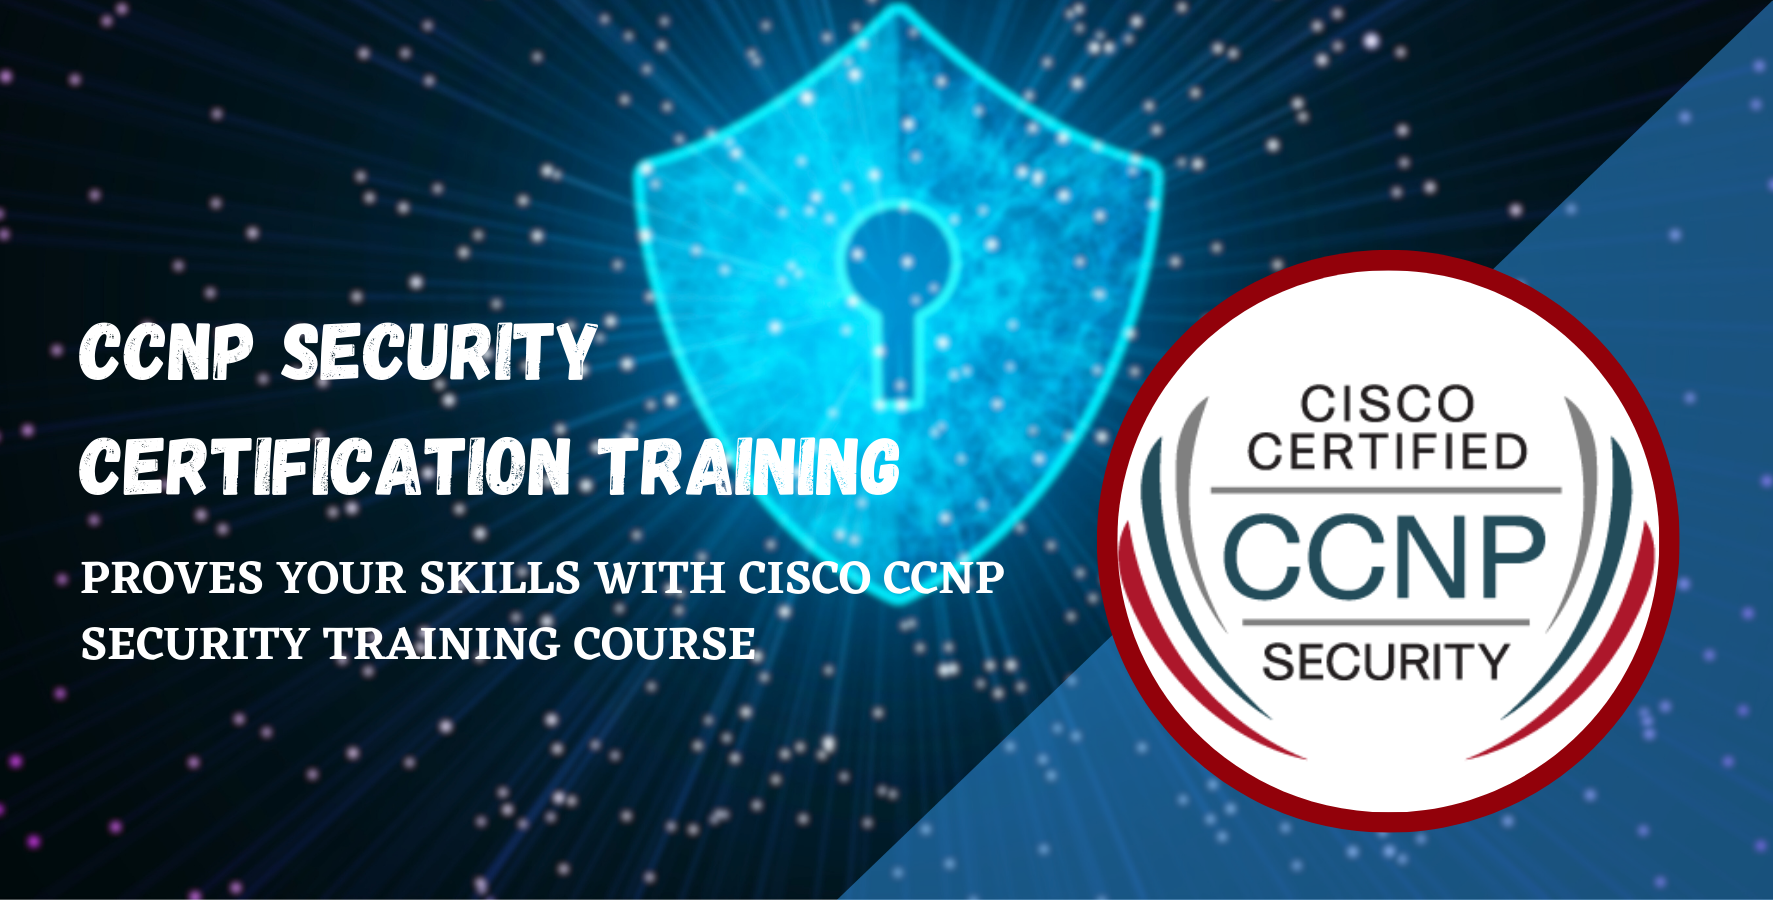 CCNP security training course